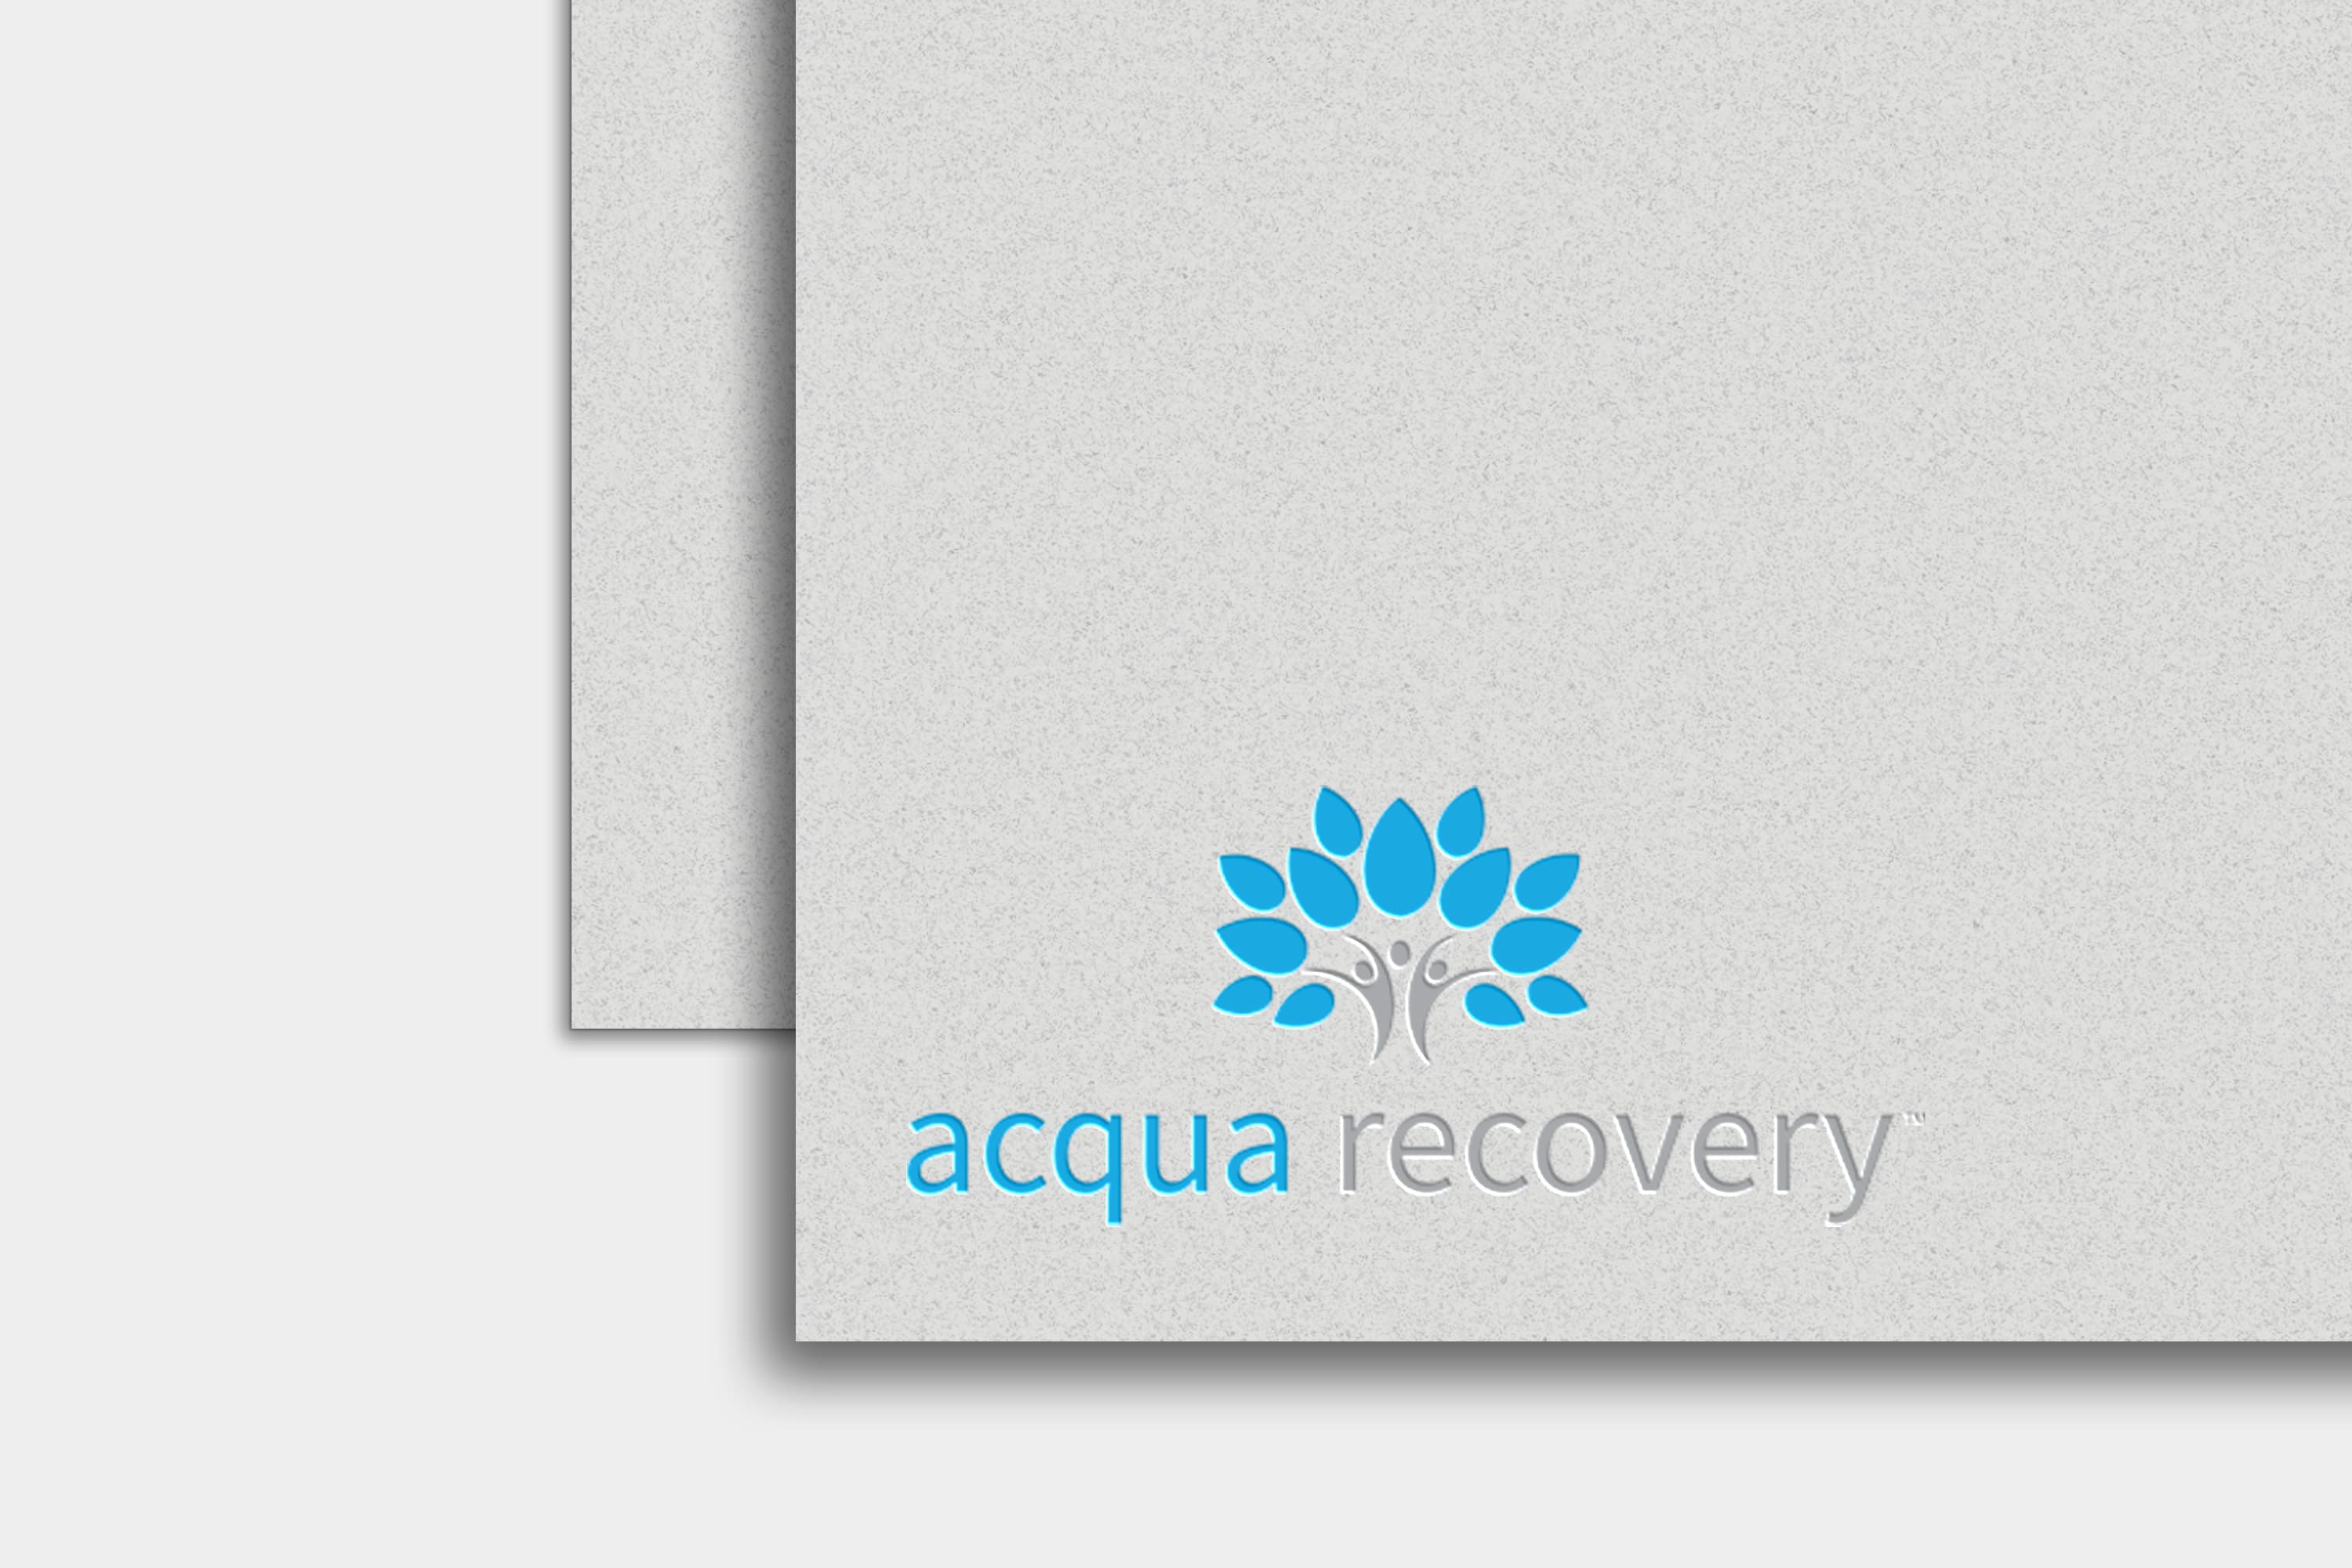 acqua recovery buzzfactory agency-1